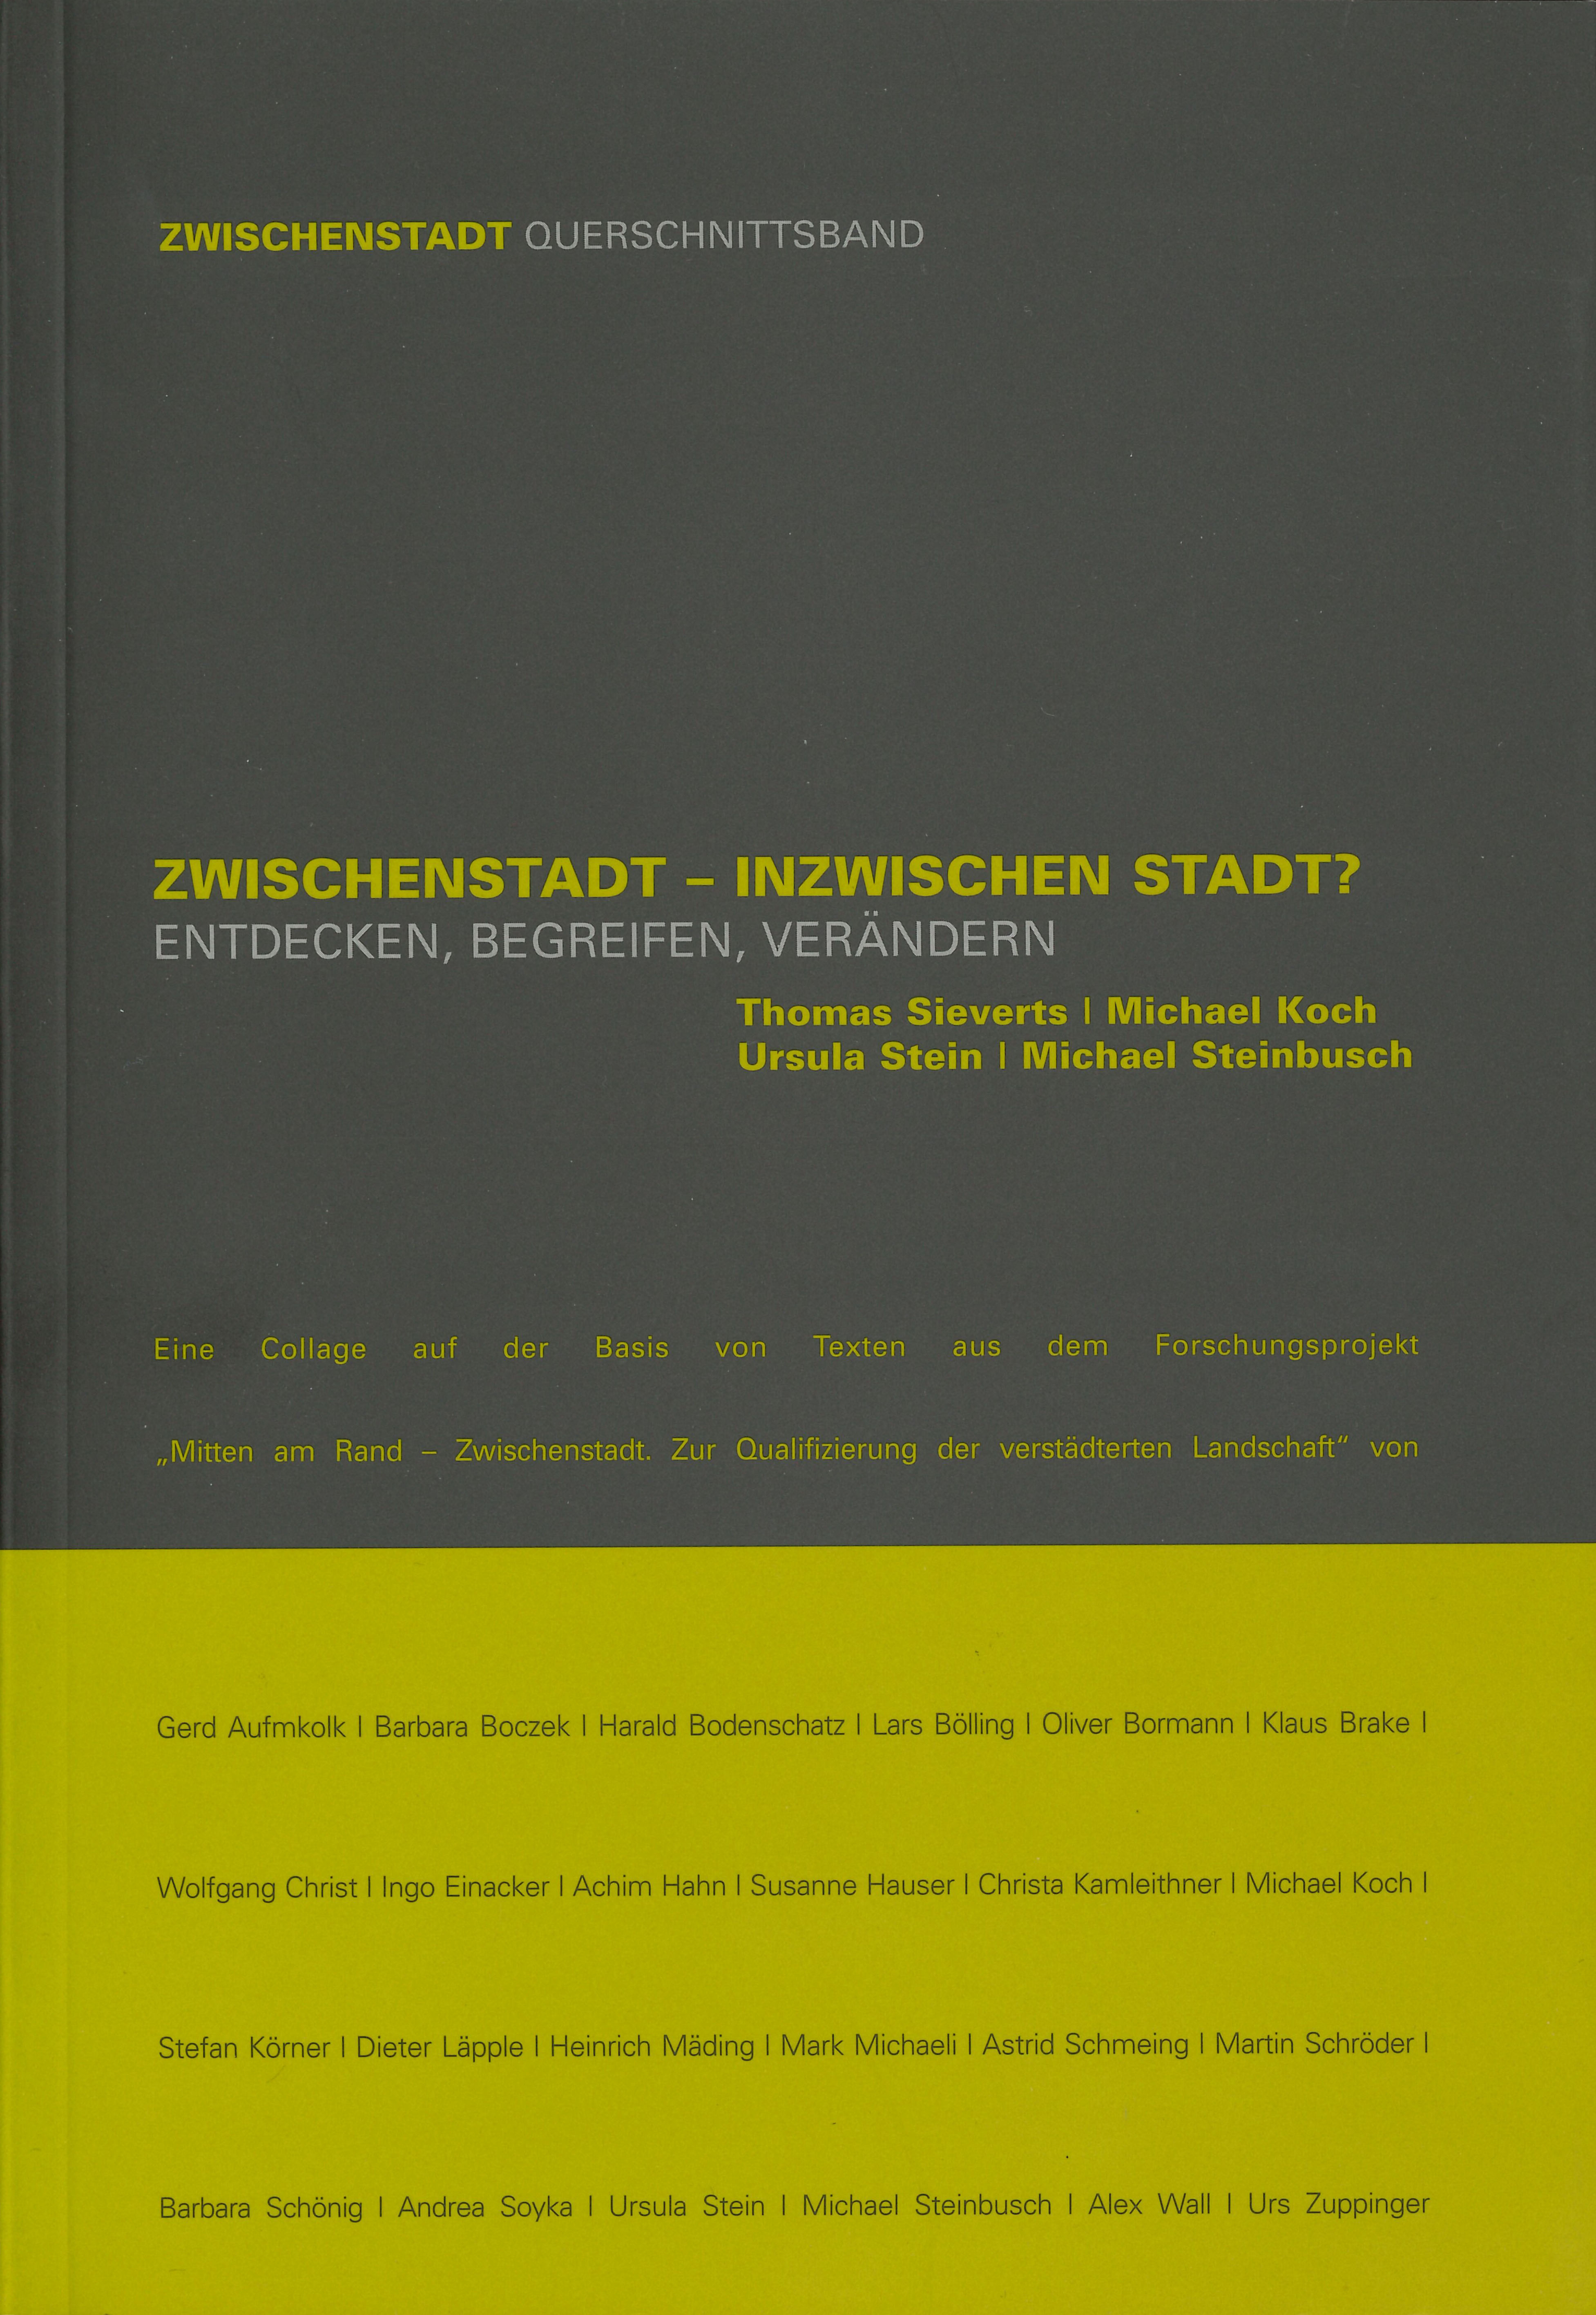 Cover "Zwischenstadt – Inzwischen Stadt?" (Zwischenstadt, Querschnittsband)